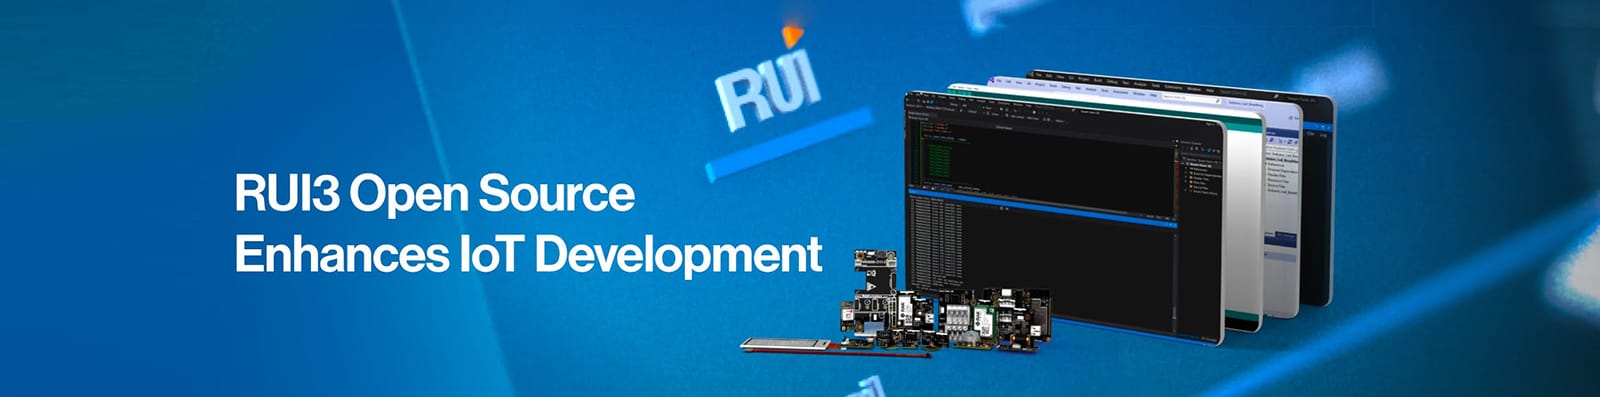 RUI3 Goes Open Source